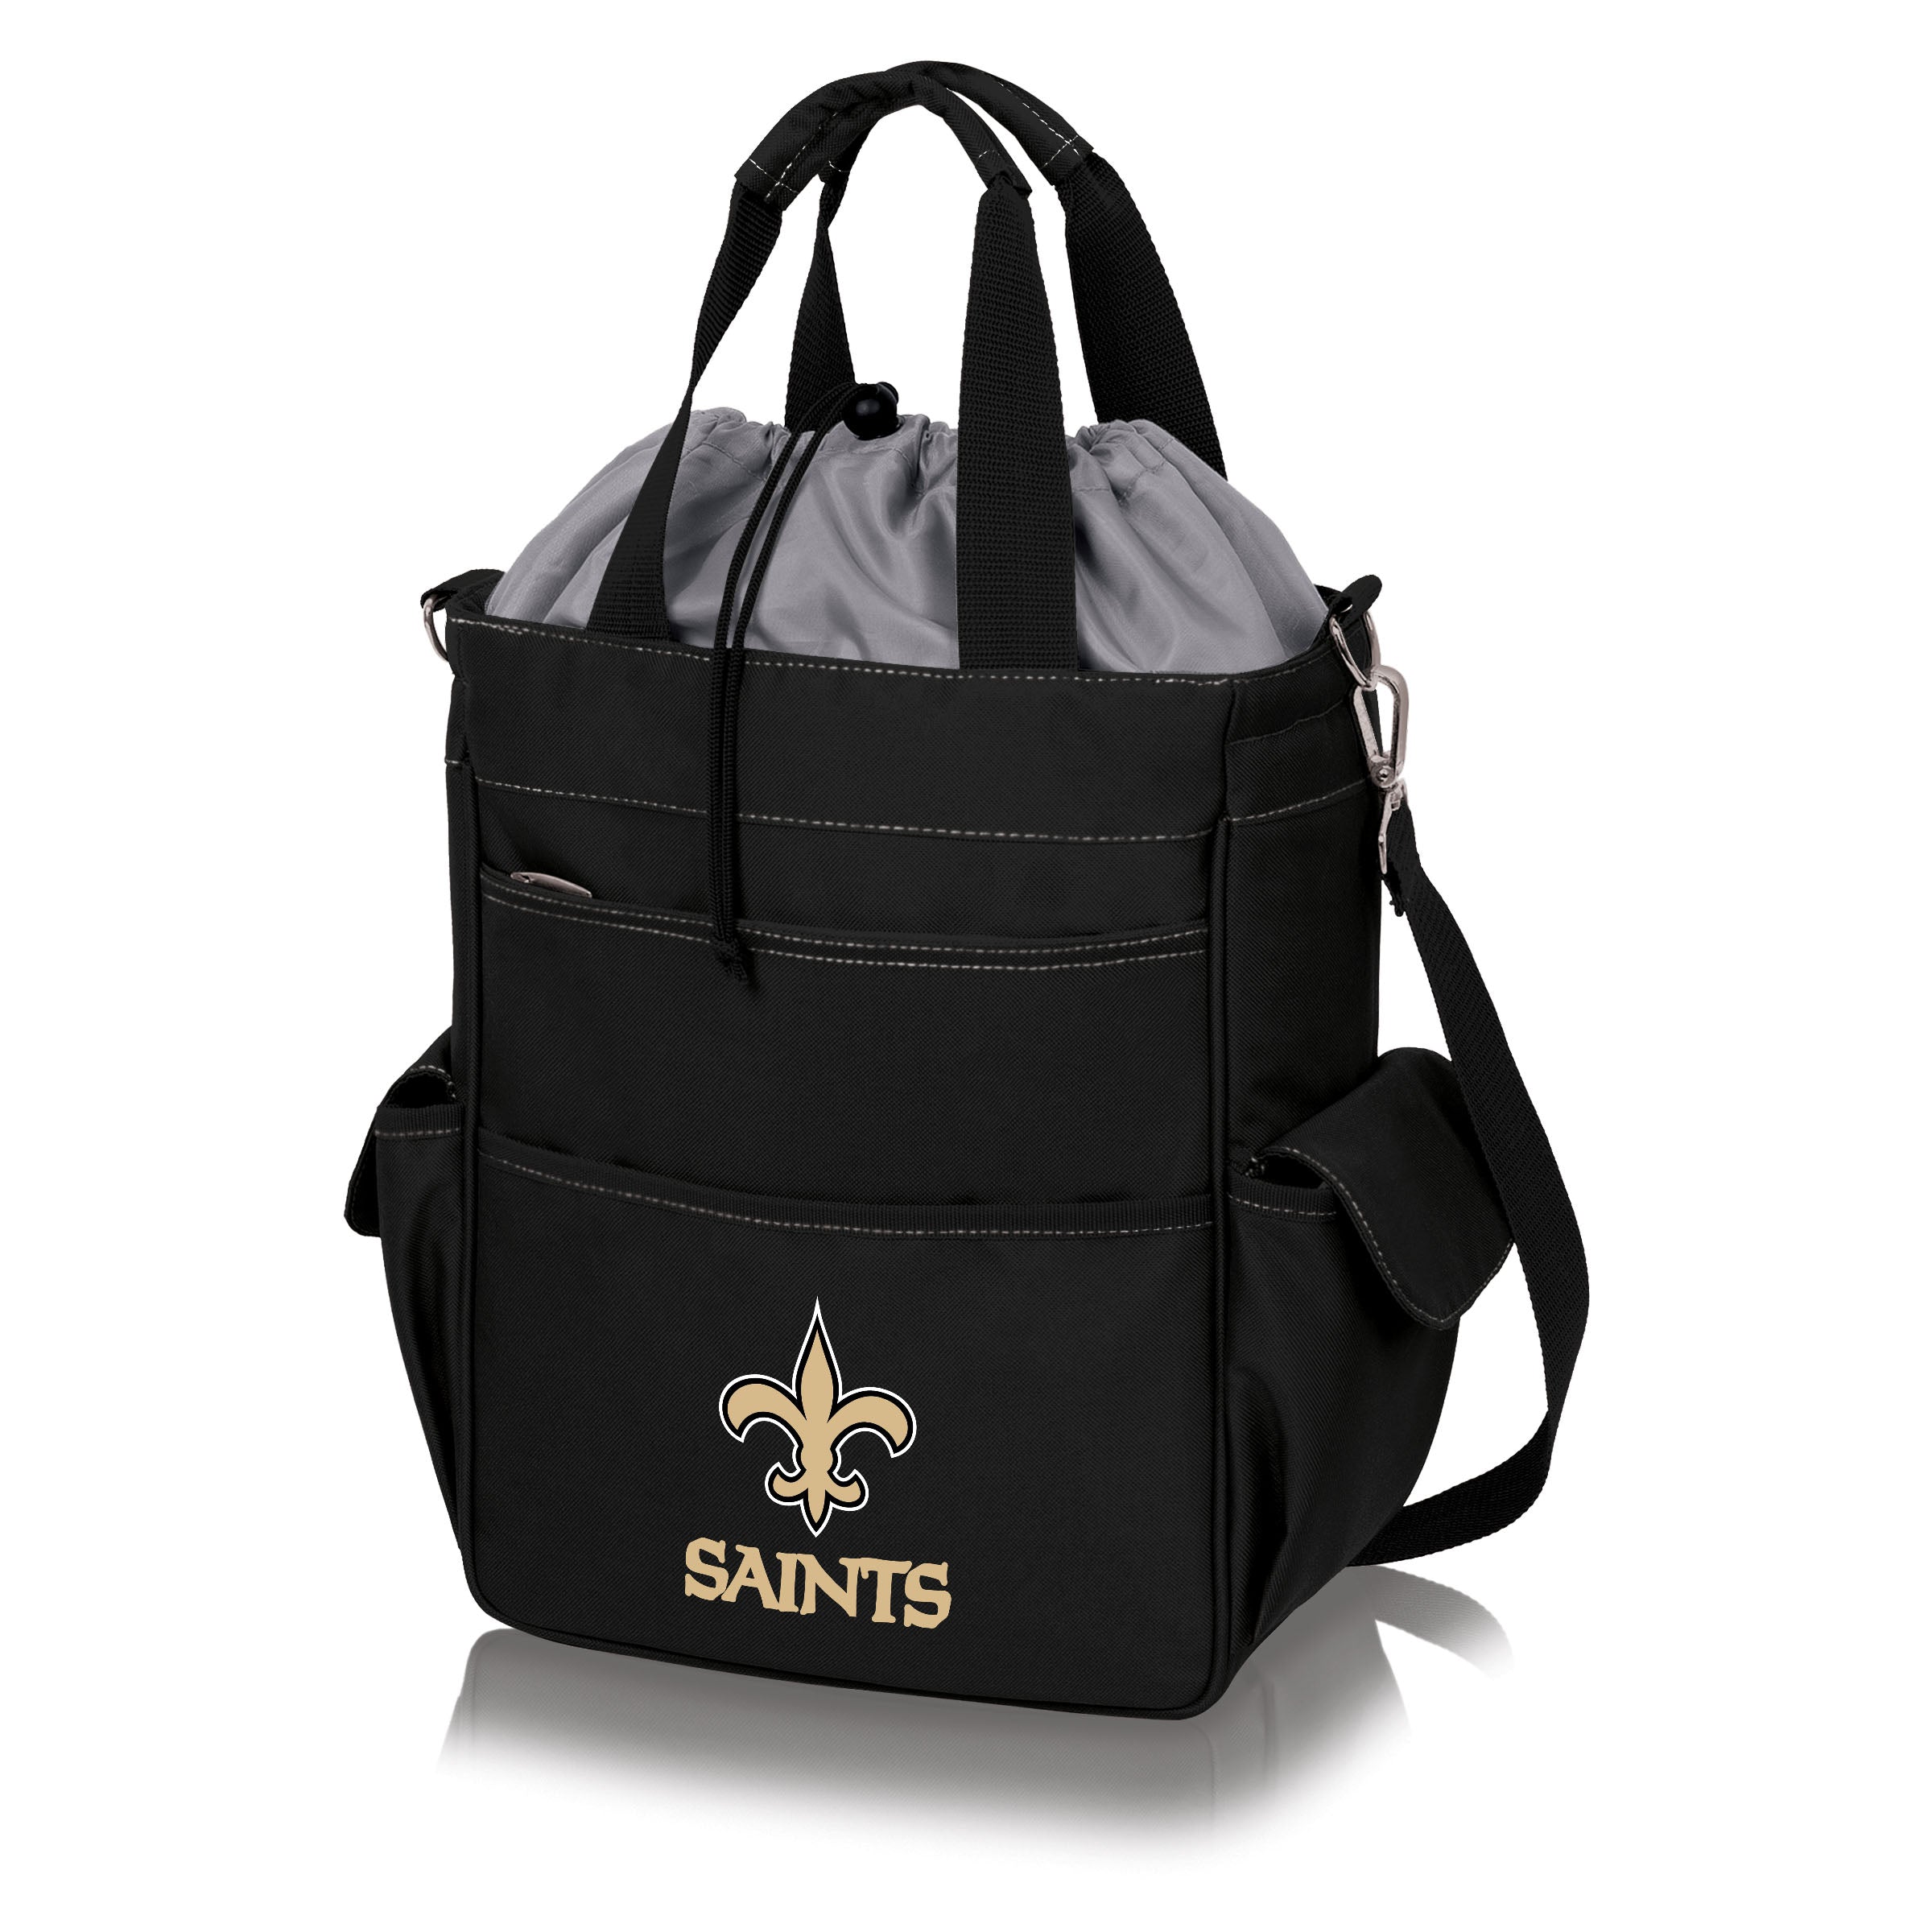 New Orleans Saints - Activo Cooler Tote Bag